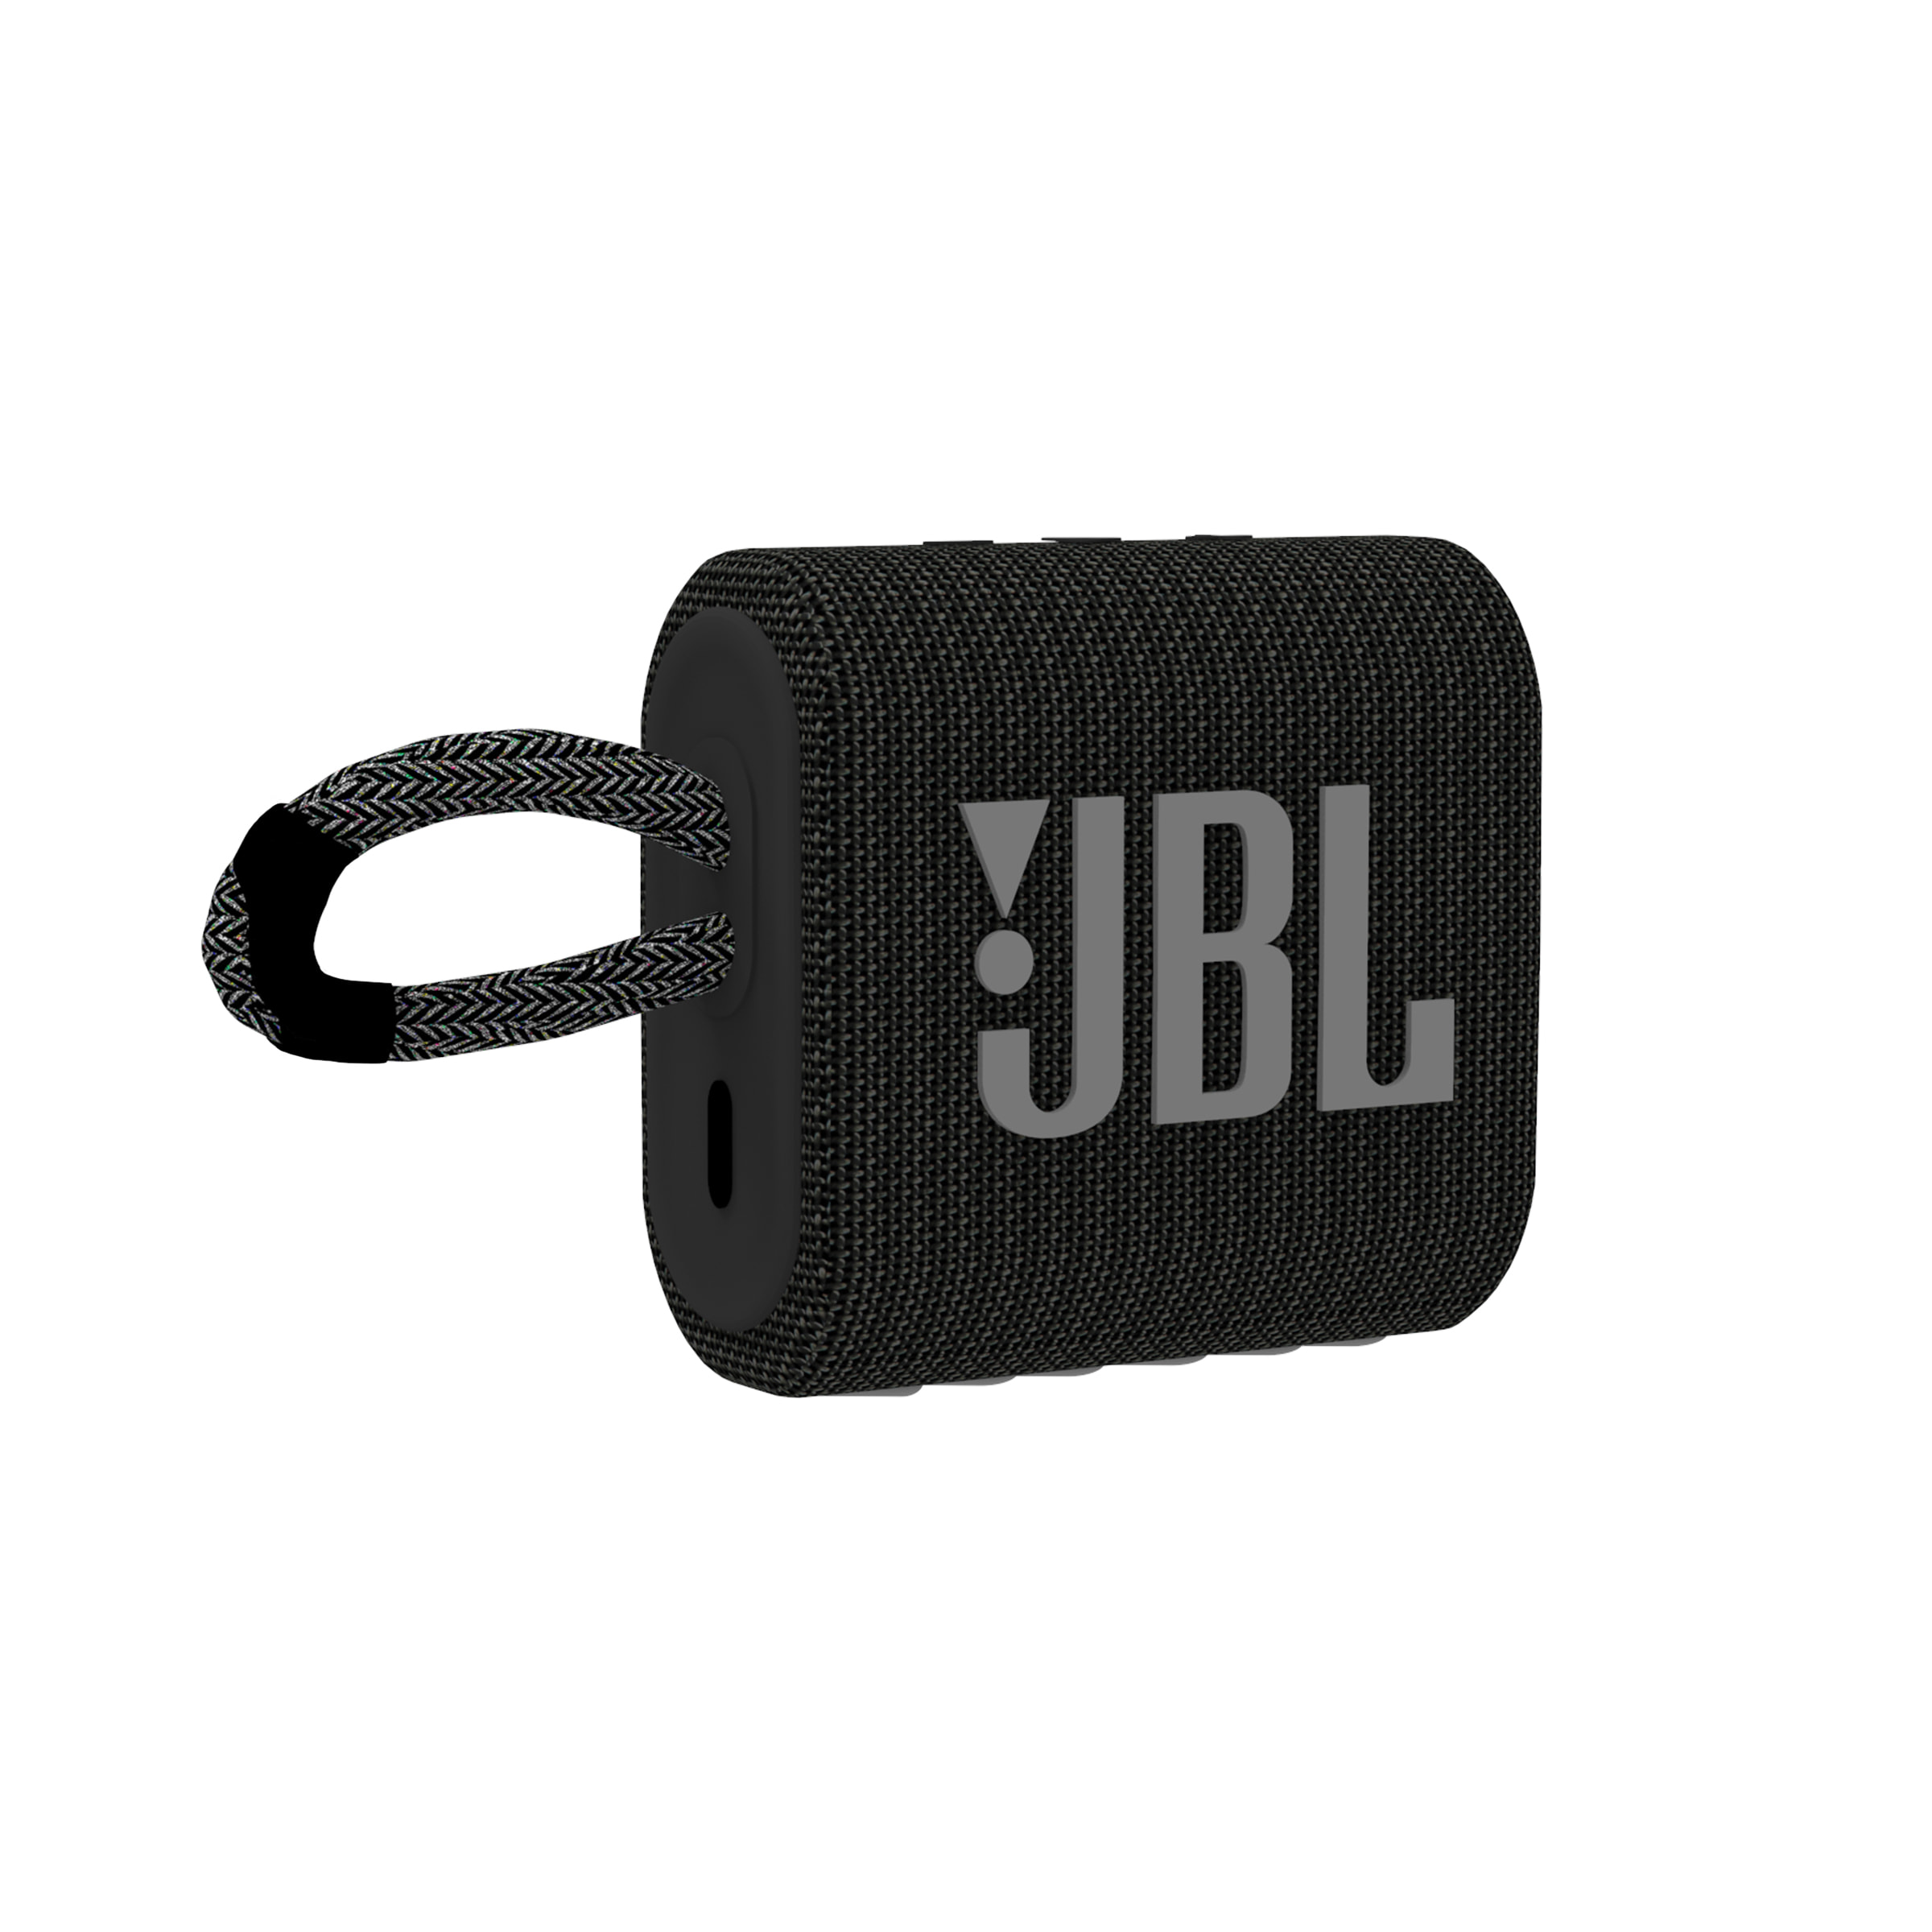 Bestandsnaam: JBL-GO3-black-1.jpg
Afmetingen: 2400 x 2400 pixels
Bestandsgrootte: 346.35 KB